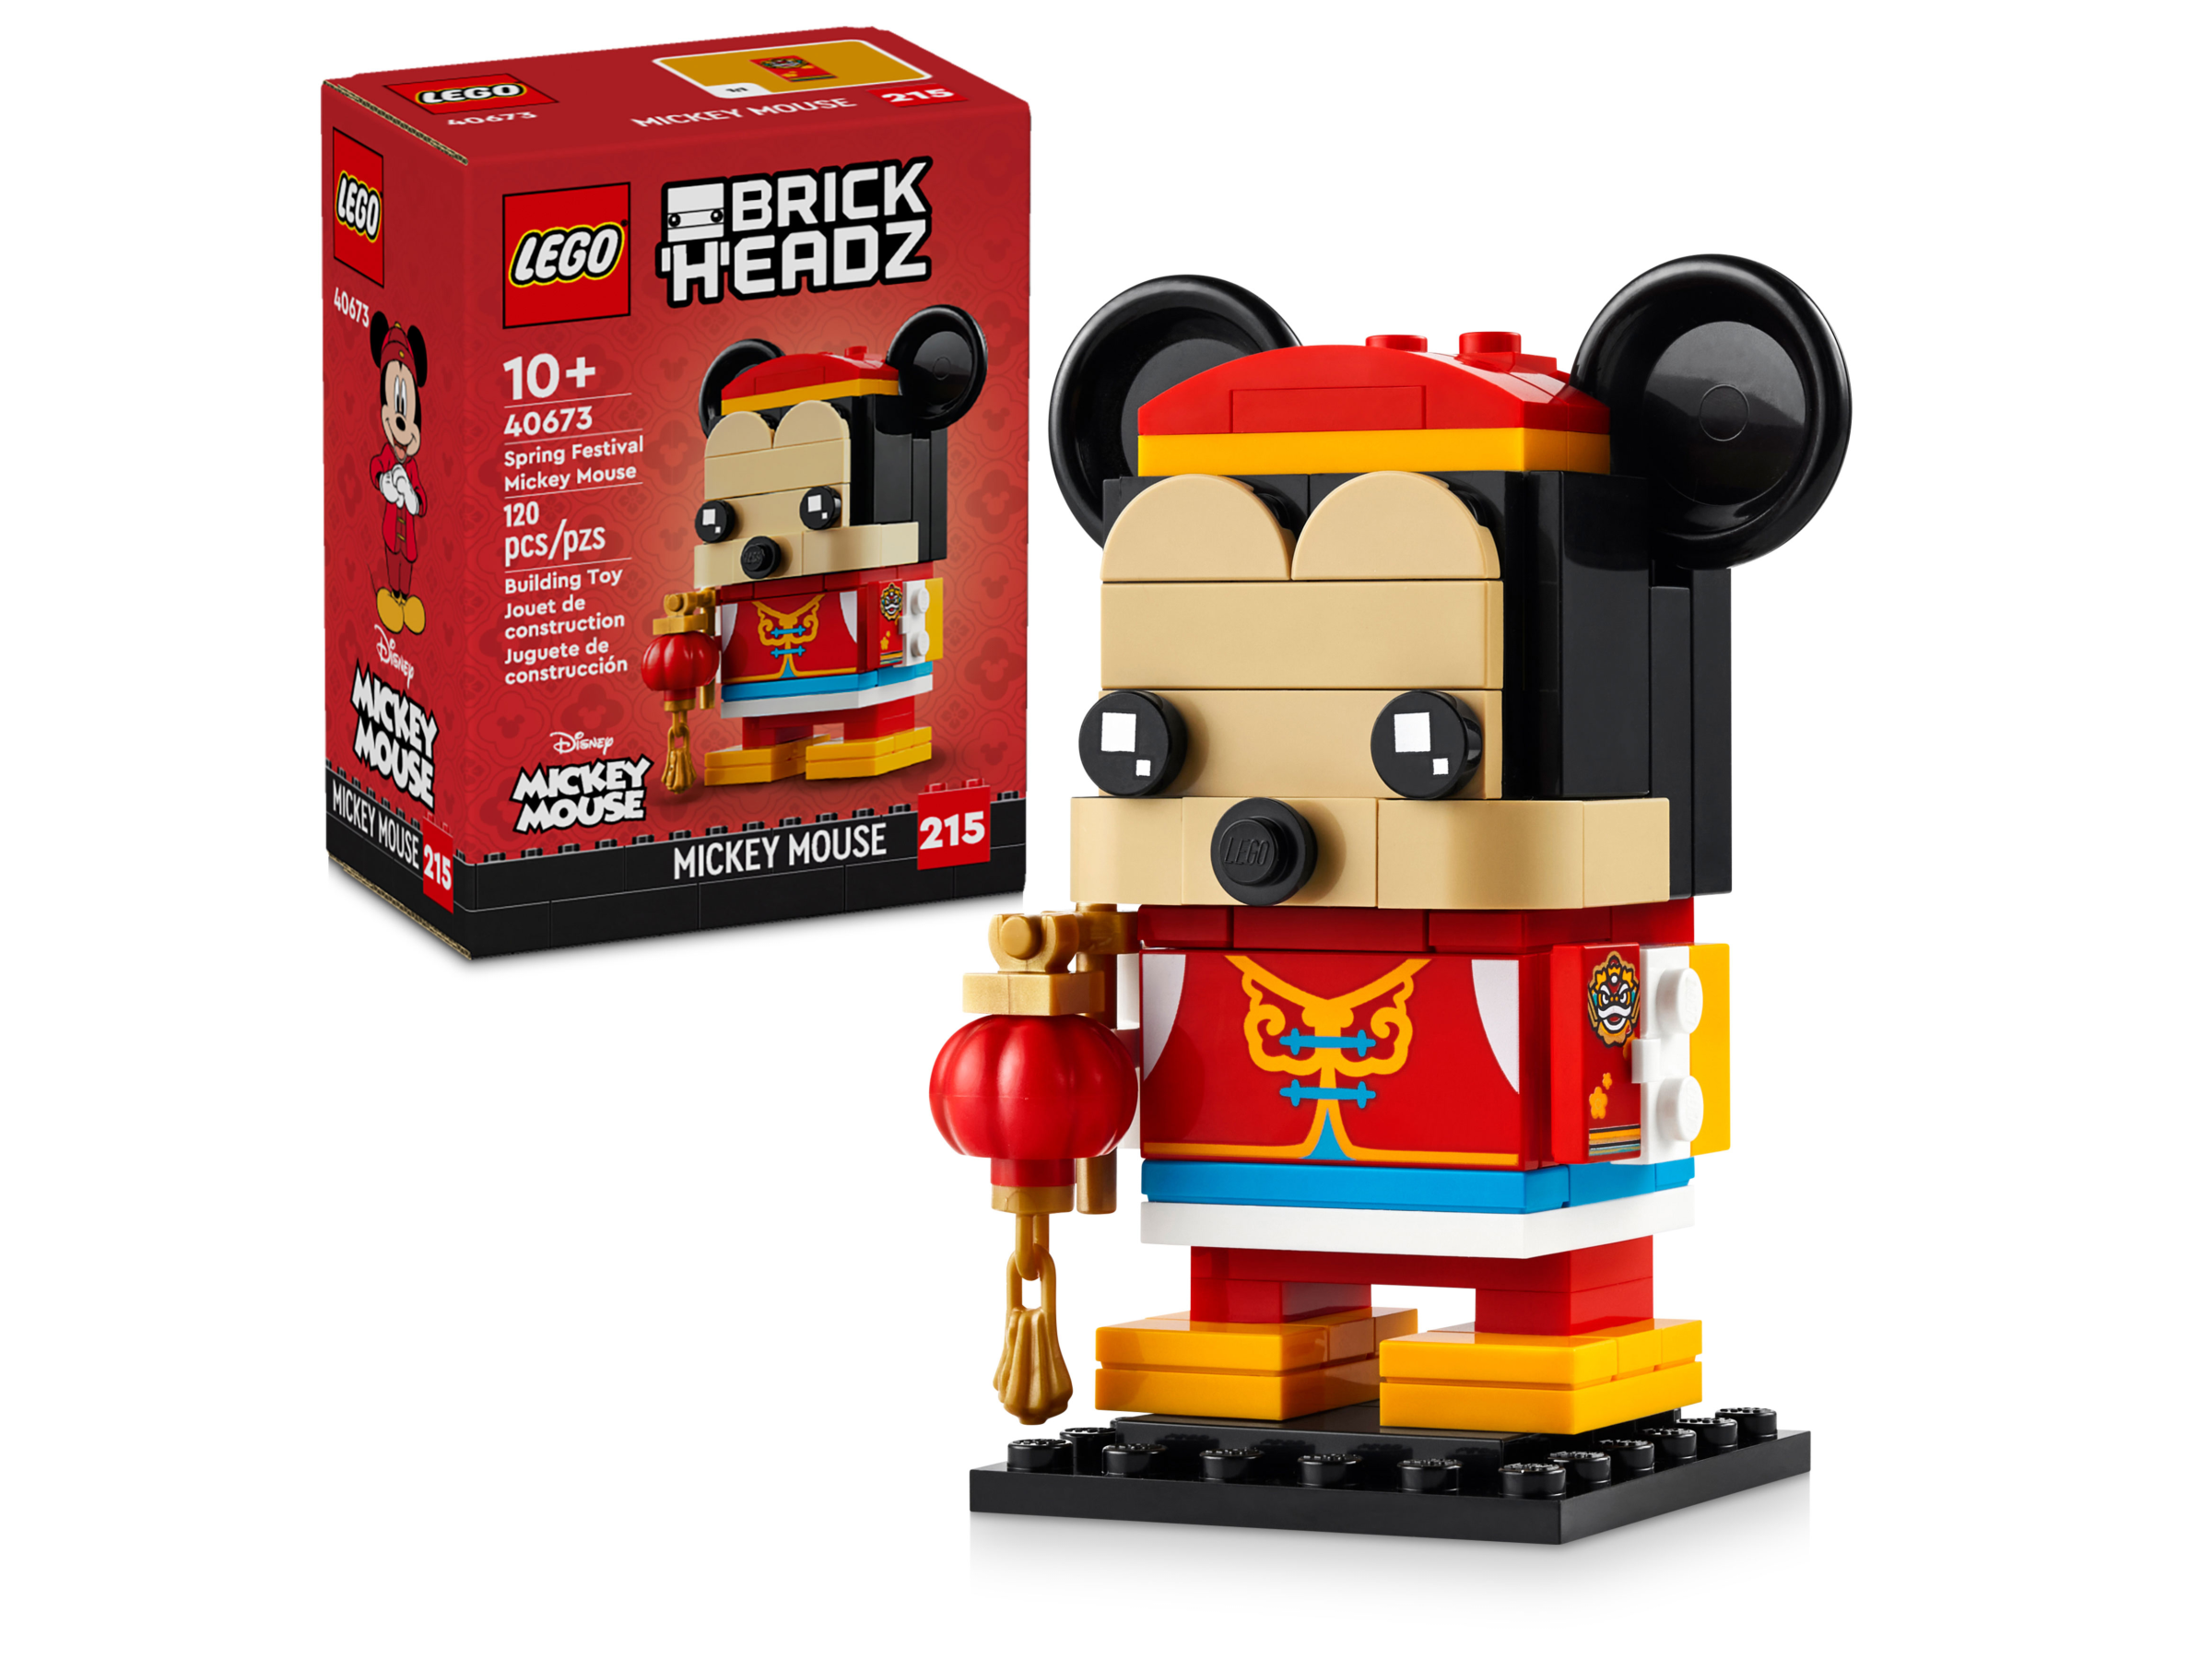 Spring Festival Mickey Mouse 40673 | BrickHeadz | Buy online at